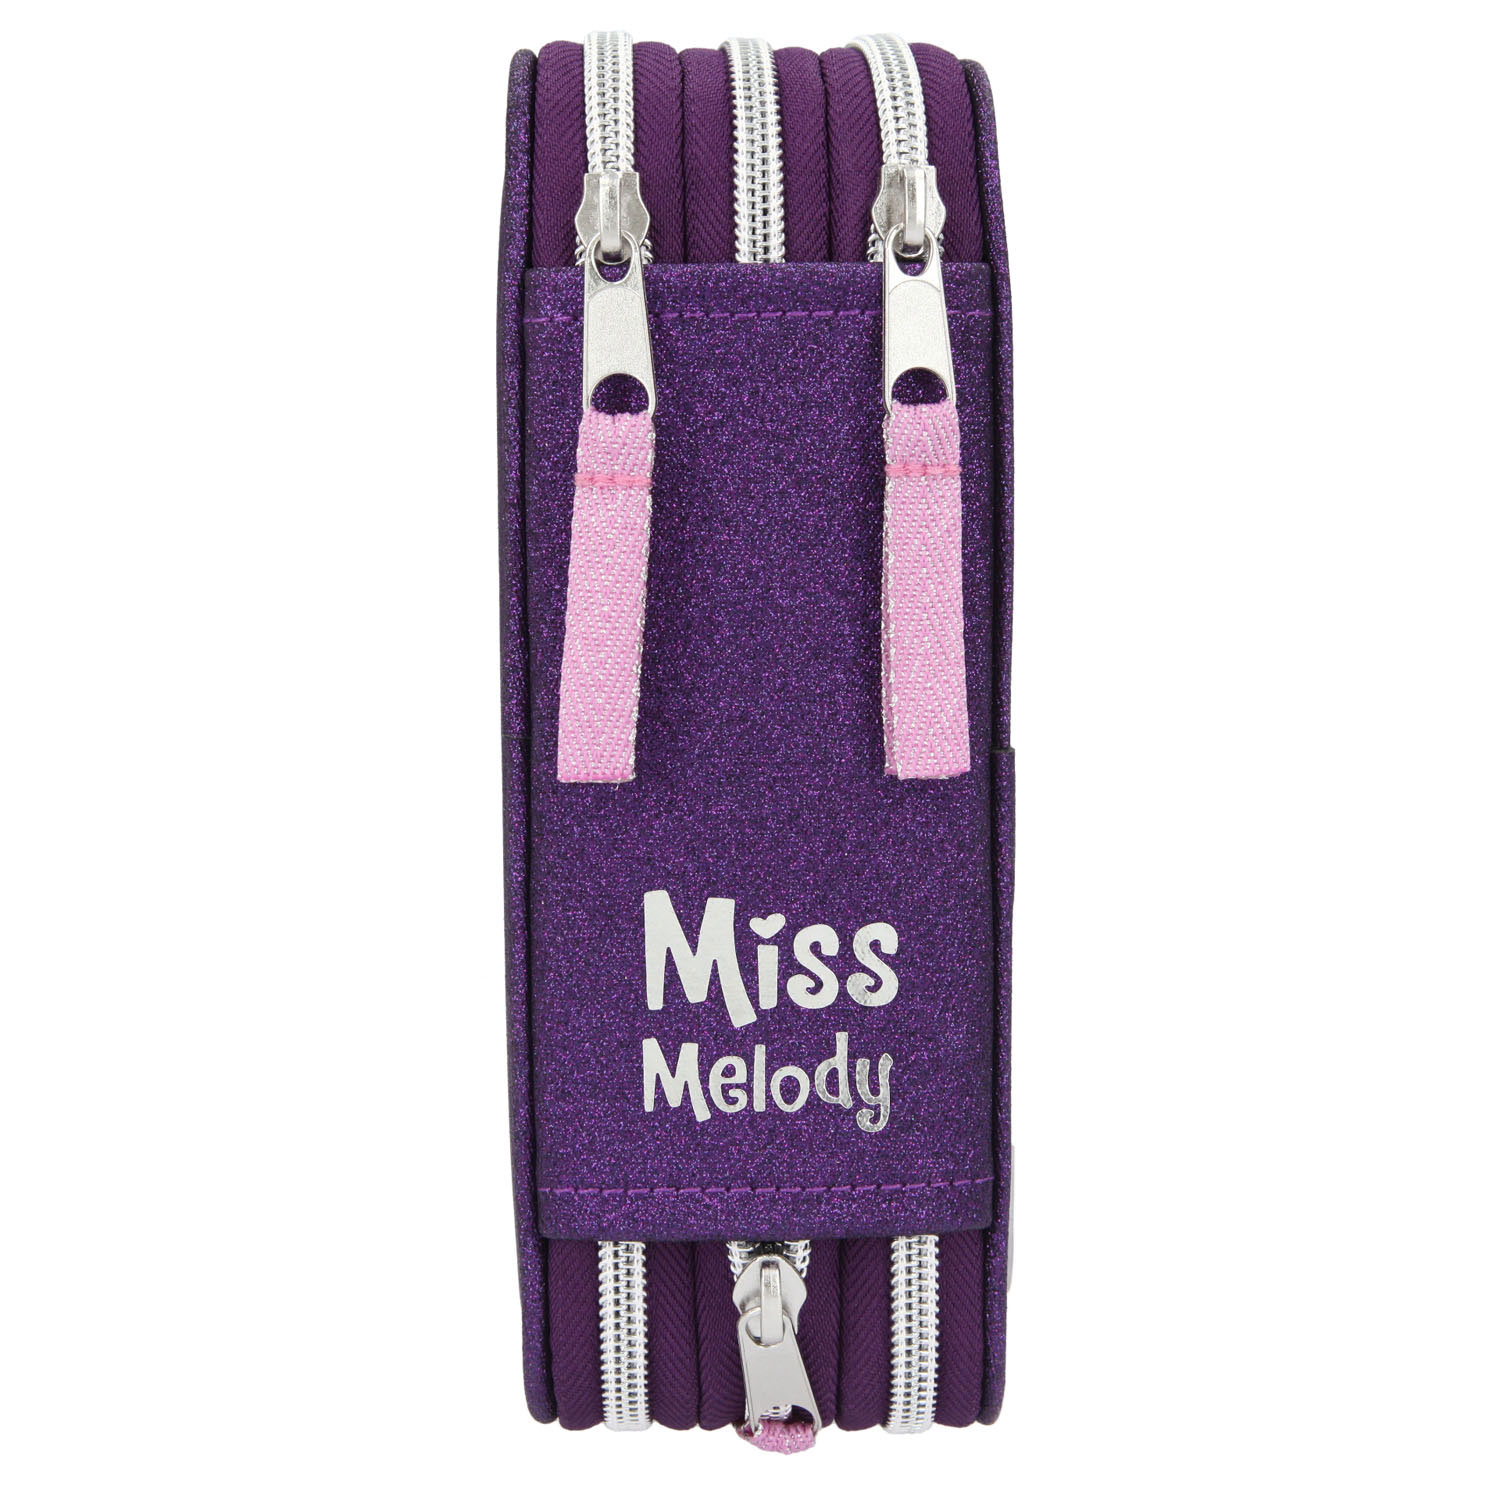 Miss Melody 3-Vaks Etui Gevuld met LED